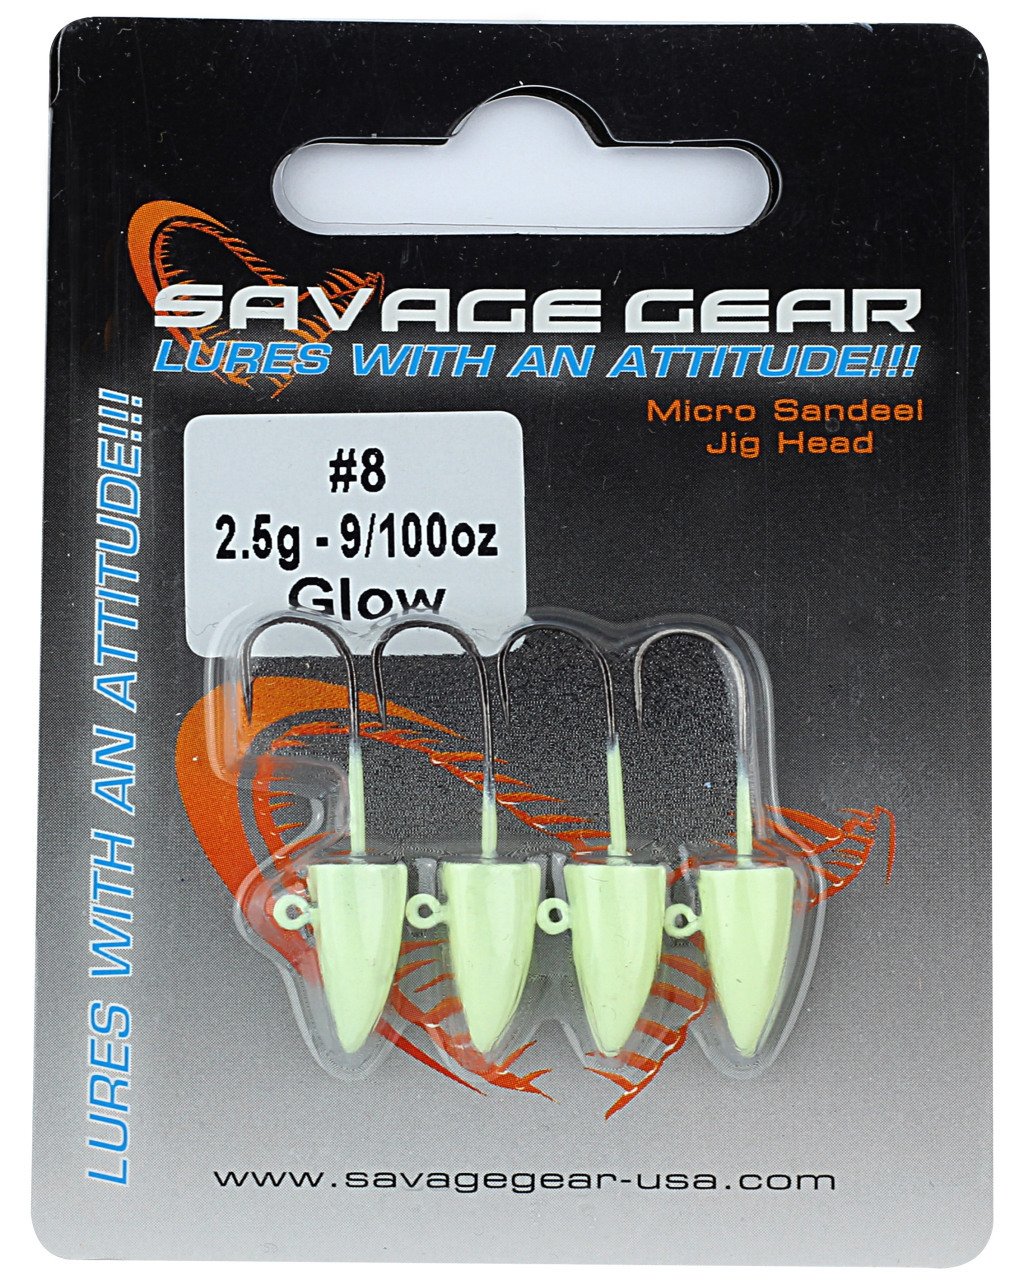 Savage gear LRF Micro sandeel jigghead 1.5g #8 4pcs Glow Suni Yem